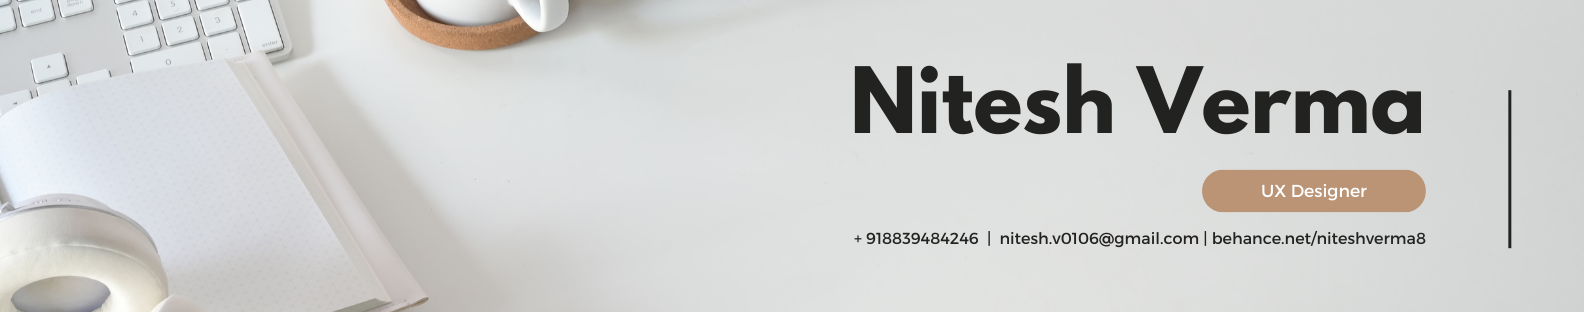 Nitesh Verma profil başlığı